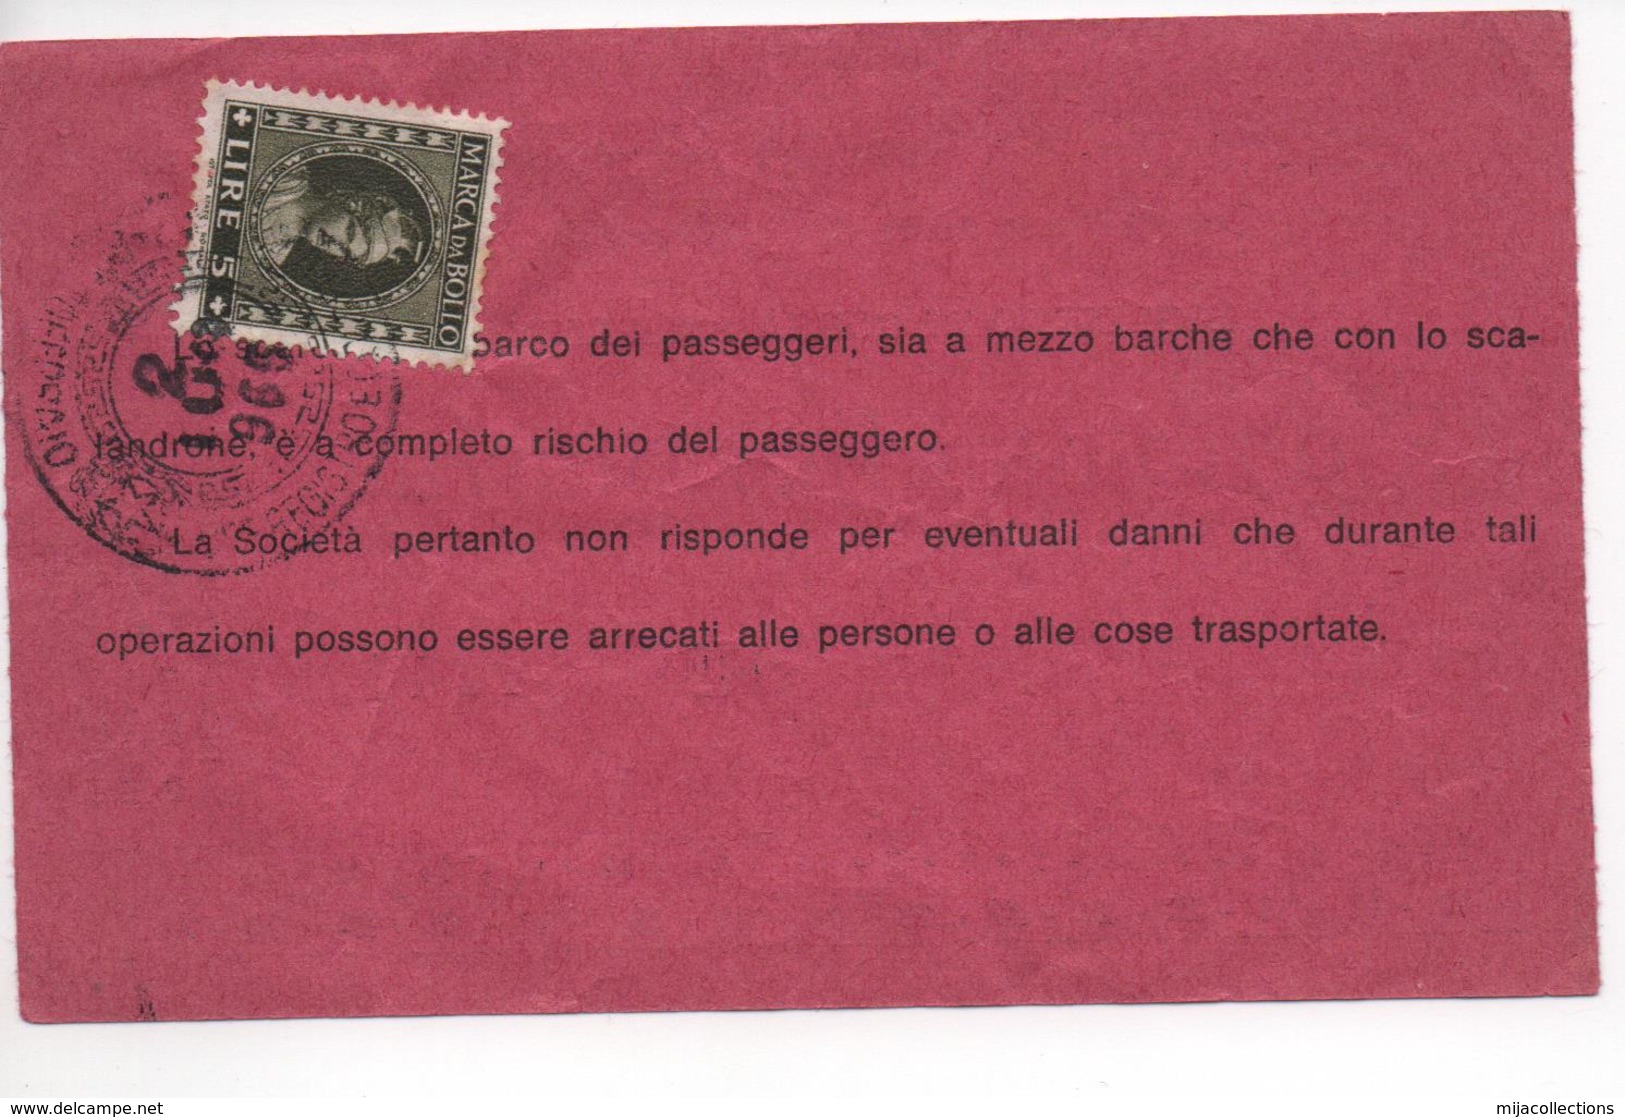 B74-2 Biglietto PIOMBINO-PORTOFERRAIO - 1965-timbre 5 Lires- VOIR 2 SCANS- 2 Billets ITALIE - Europe